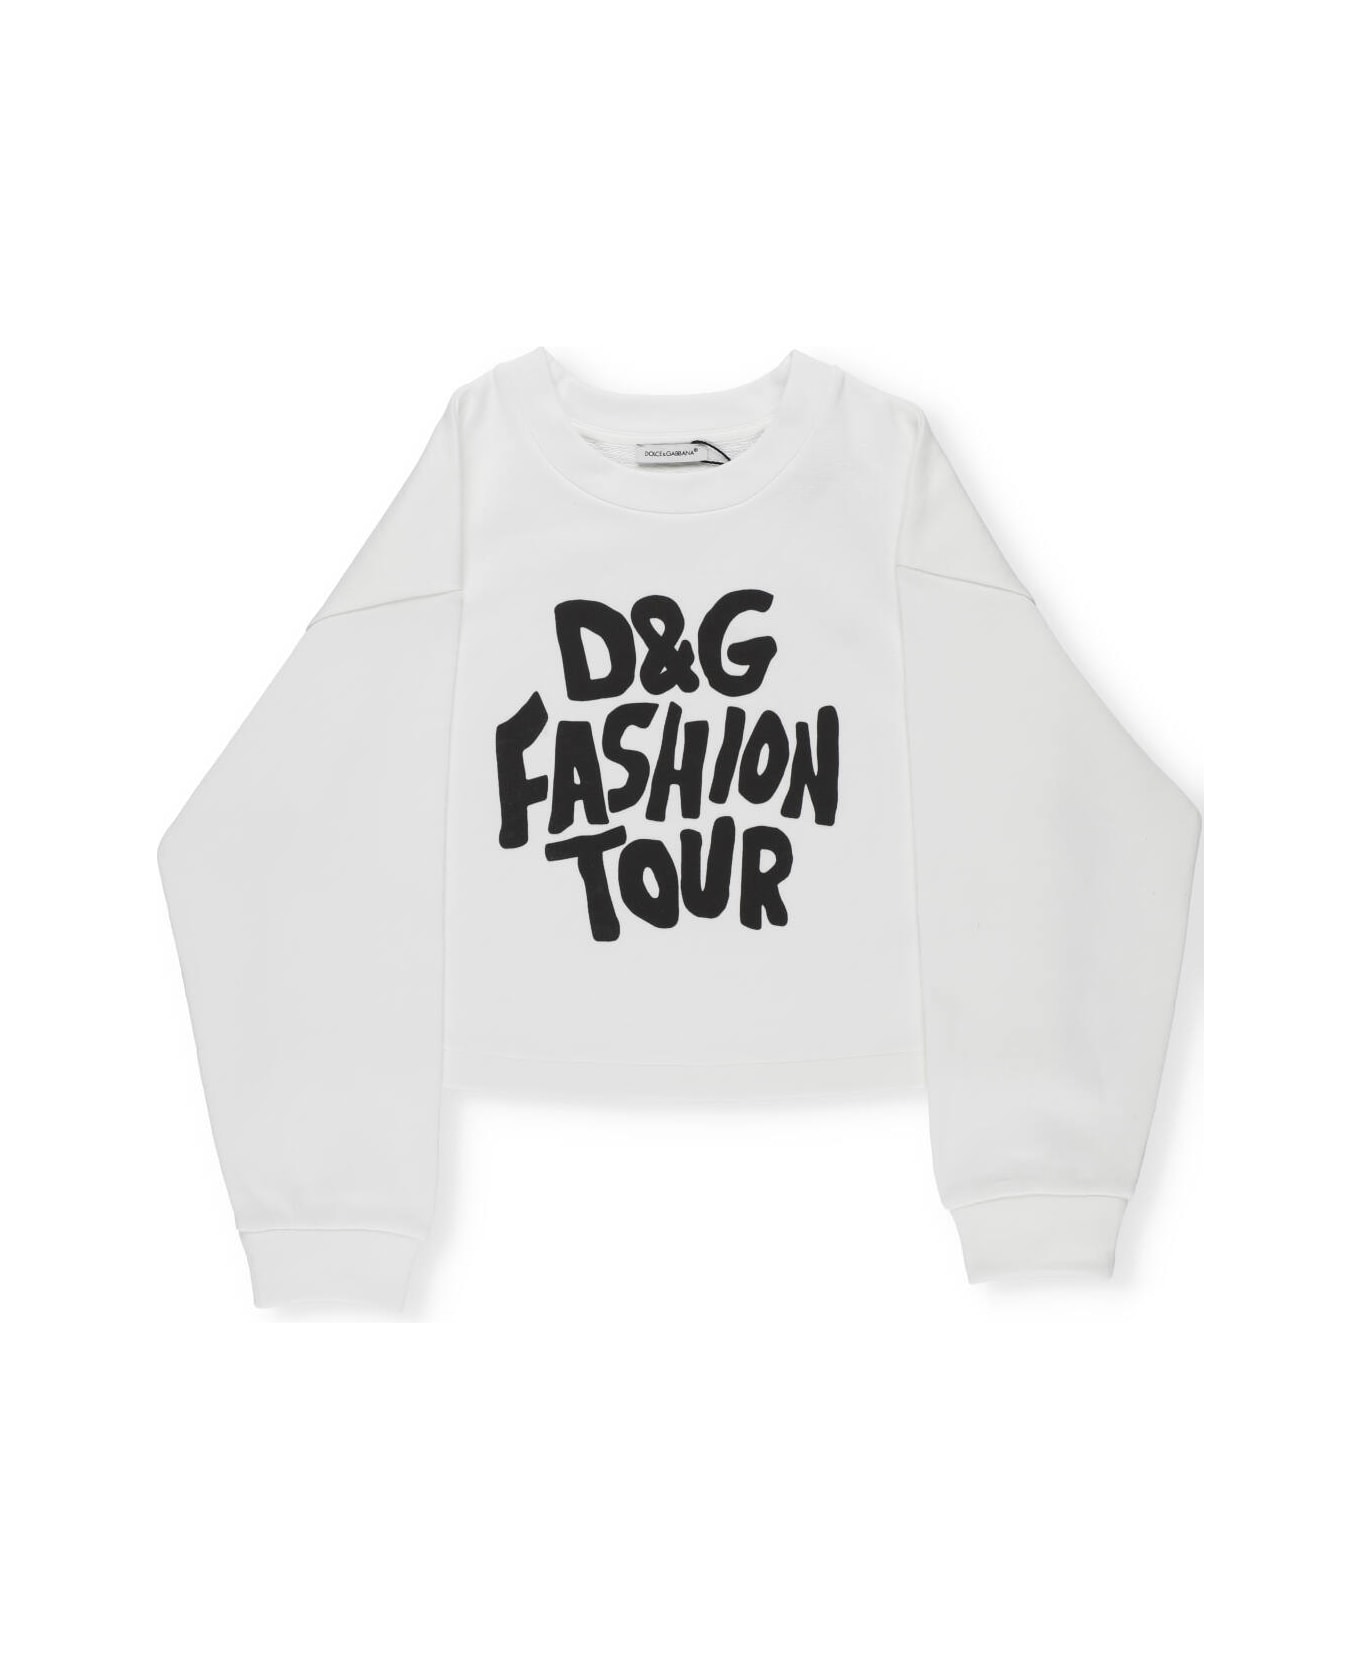 Dolce & Gabbana Dg Fashion Tour Sweatshirt - White